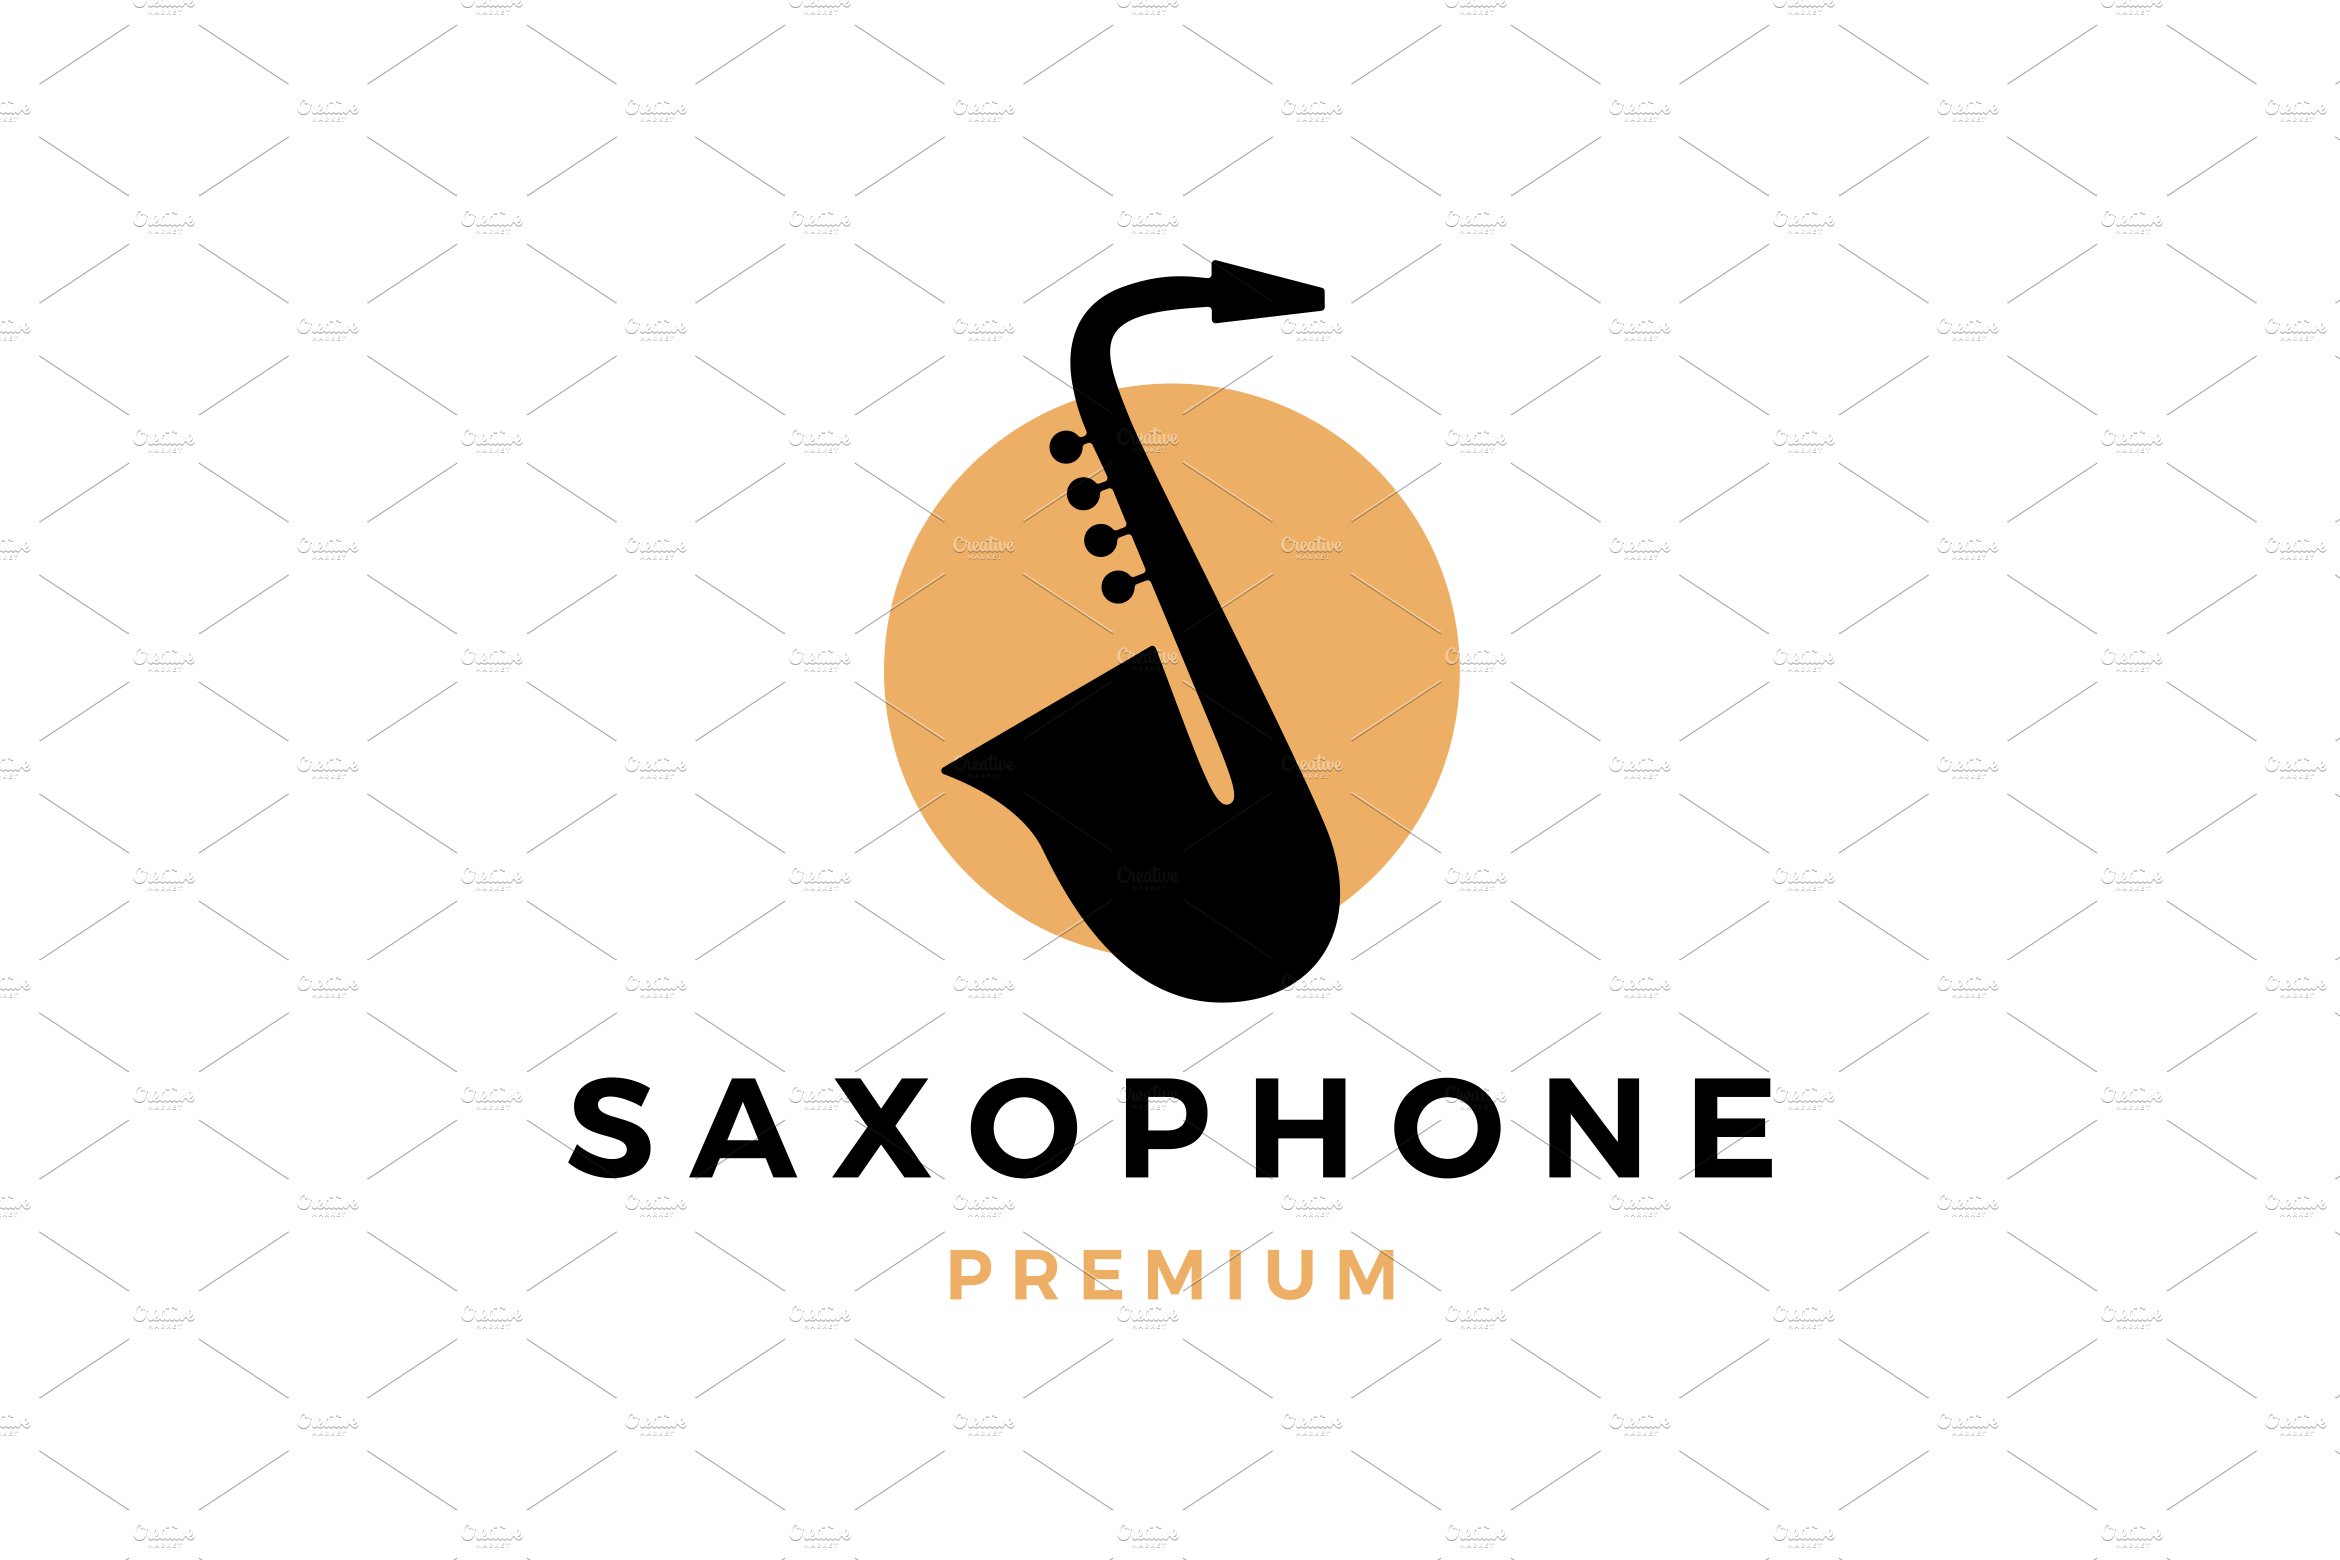 Saxophone Logo vector icon cover image.